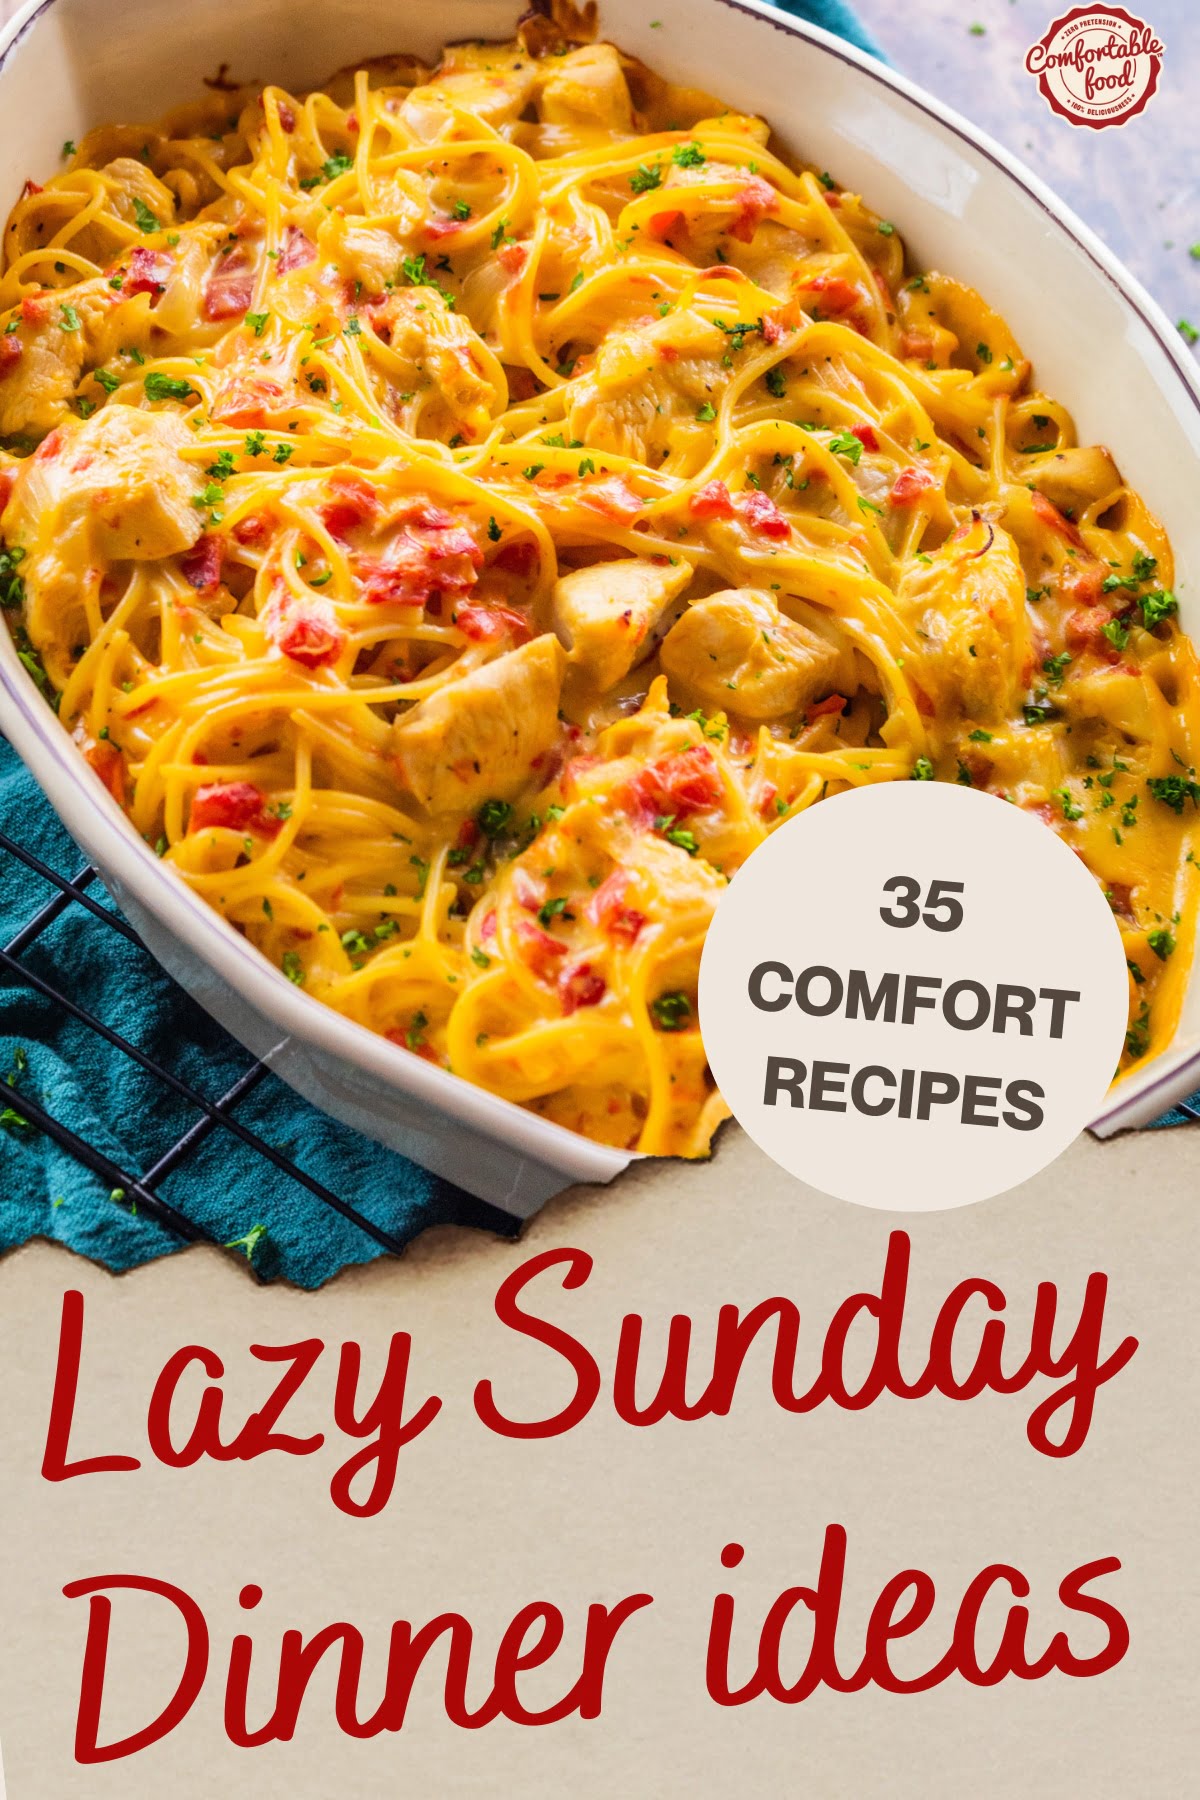 Lazy sunday dinner ideas socials